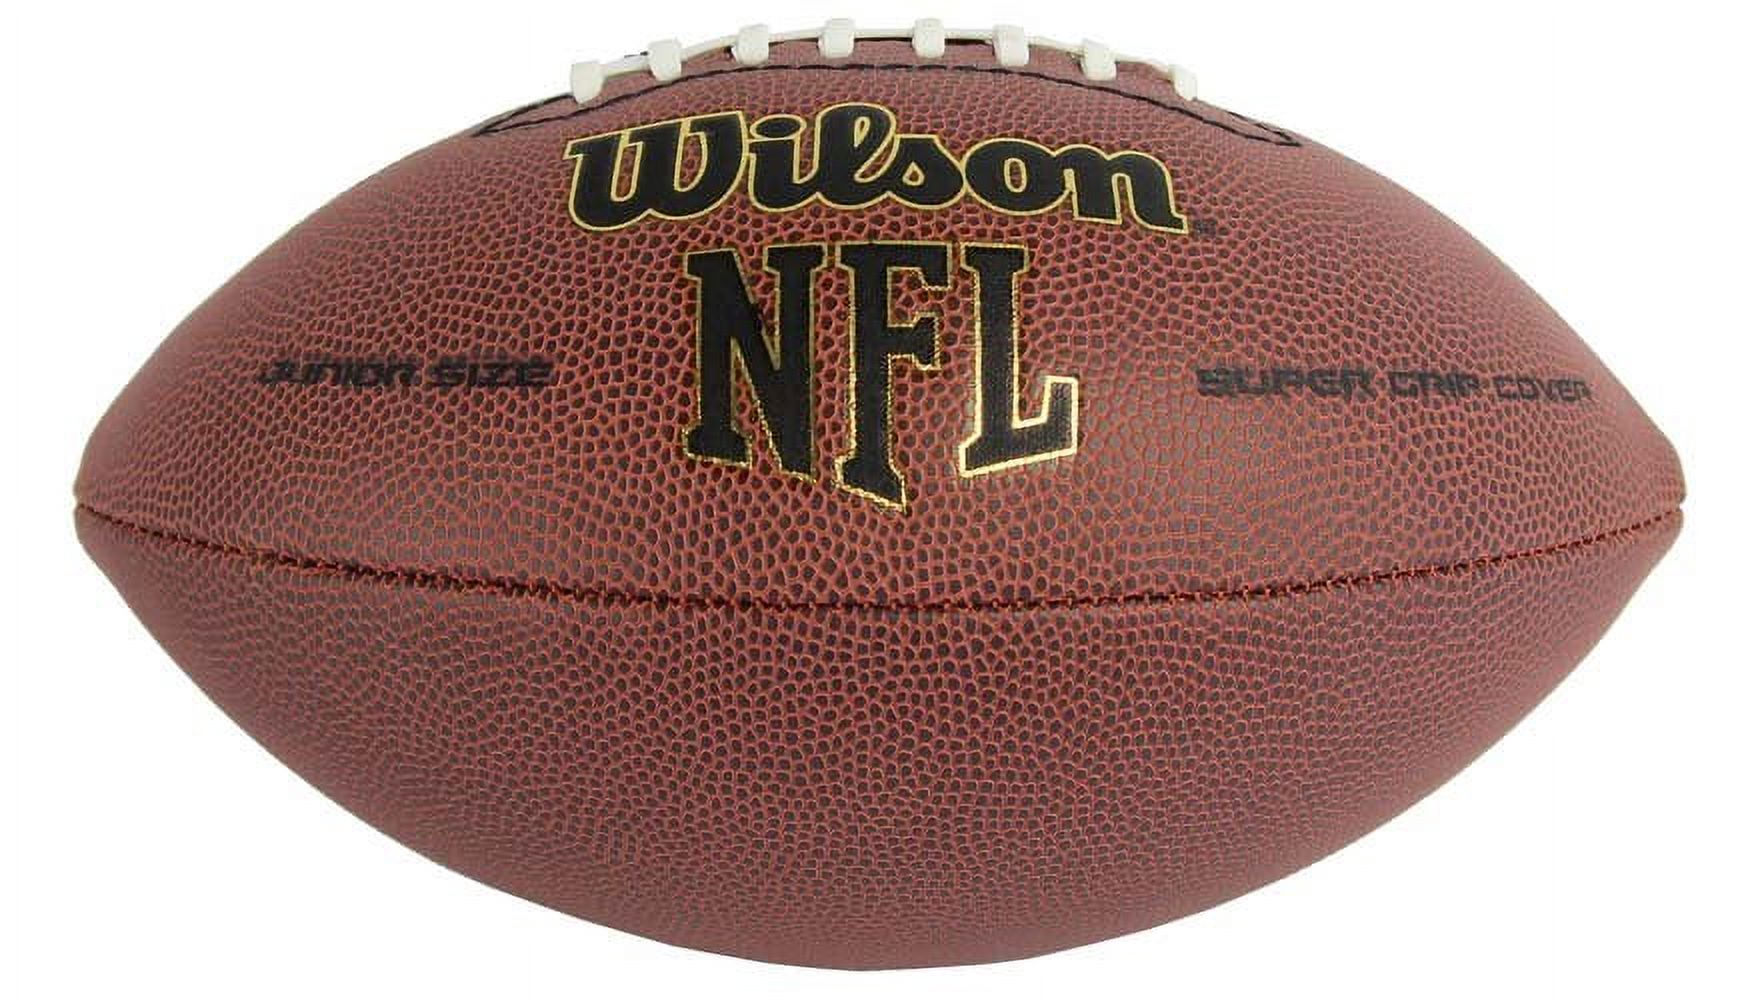 Wilson NFL Super Grip Football - image 2 of 6